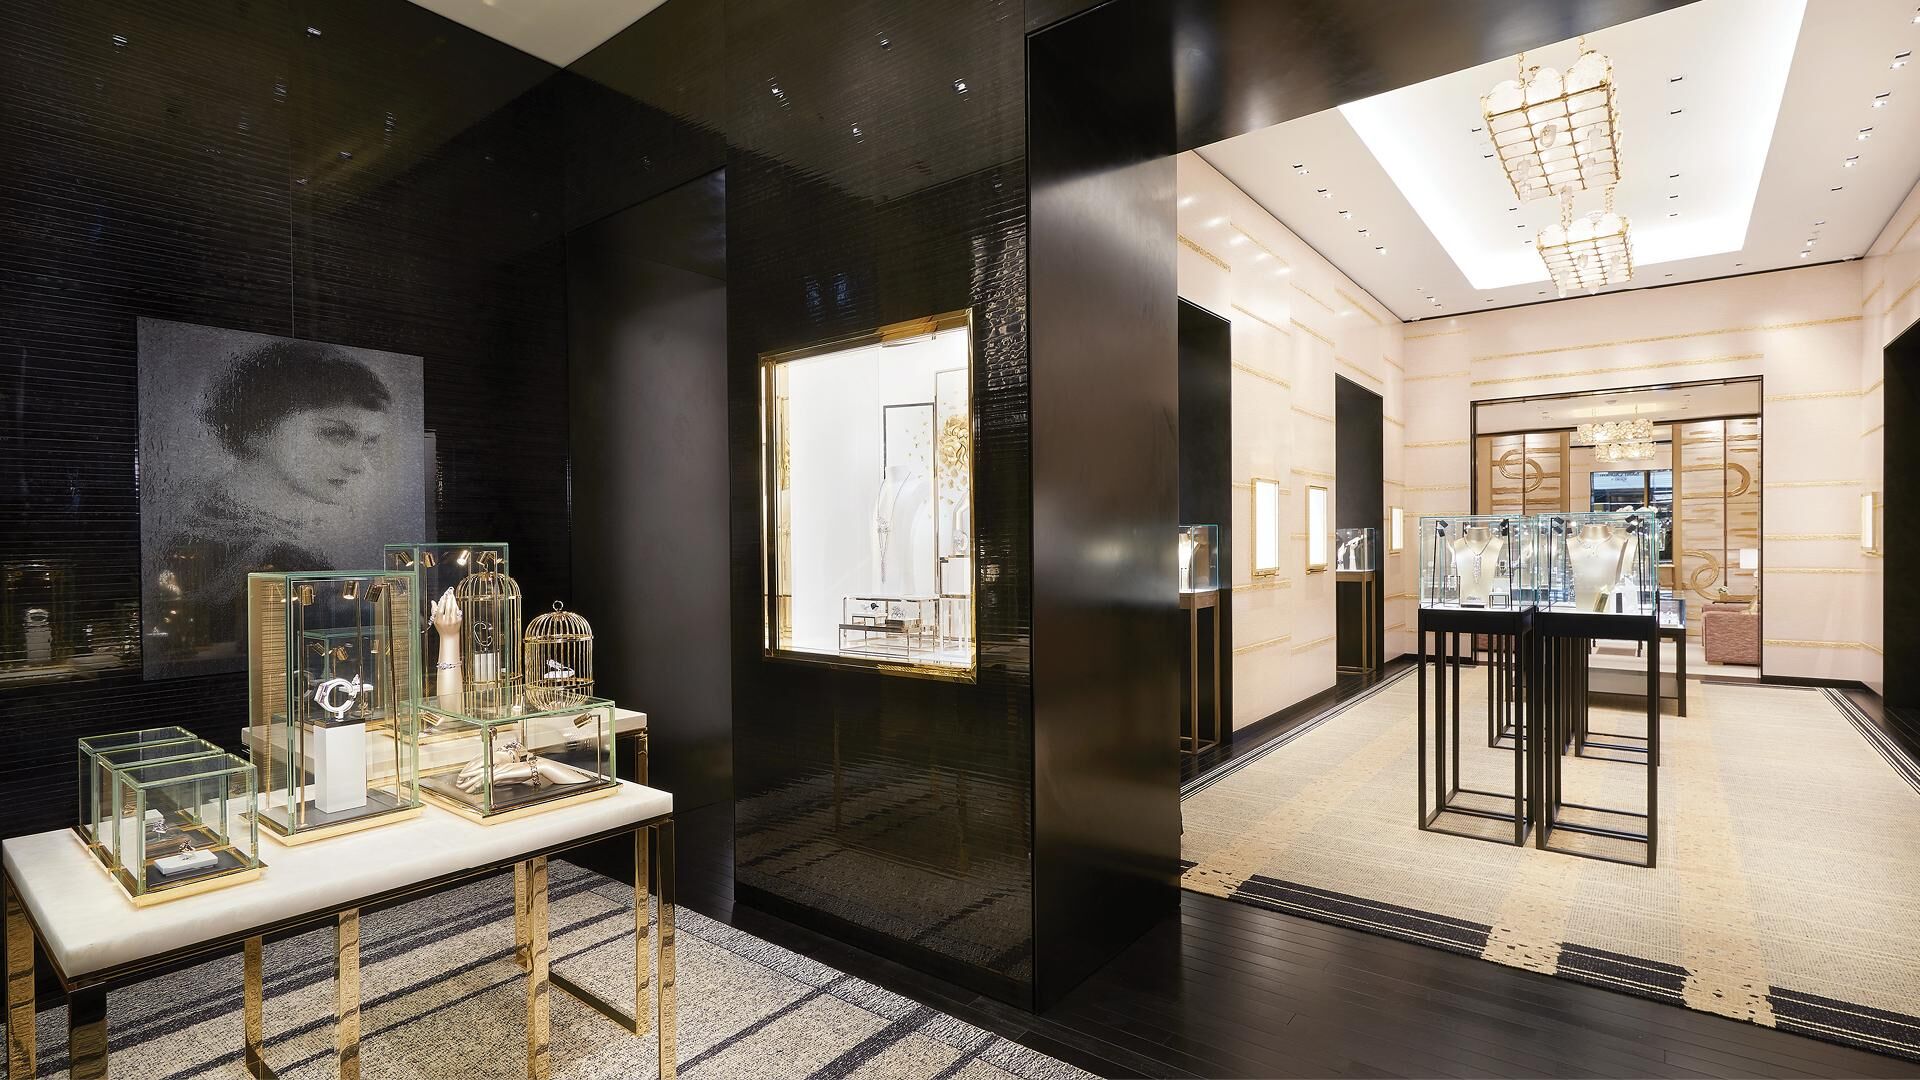 DUBAI, UAE - APRIL 08, 2016: Inside Chanel Store At Dubai